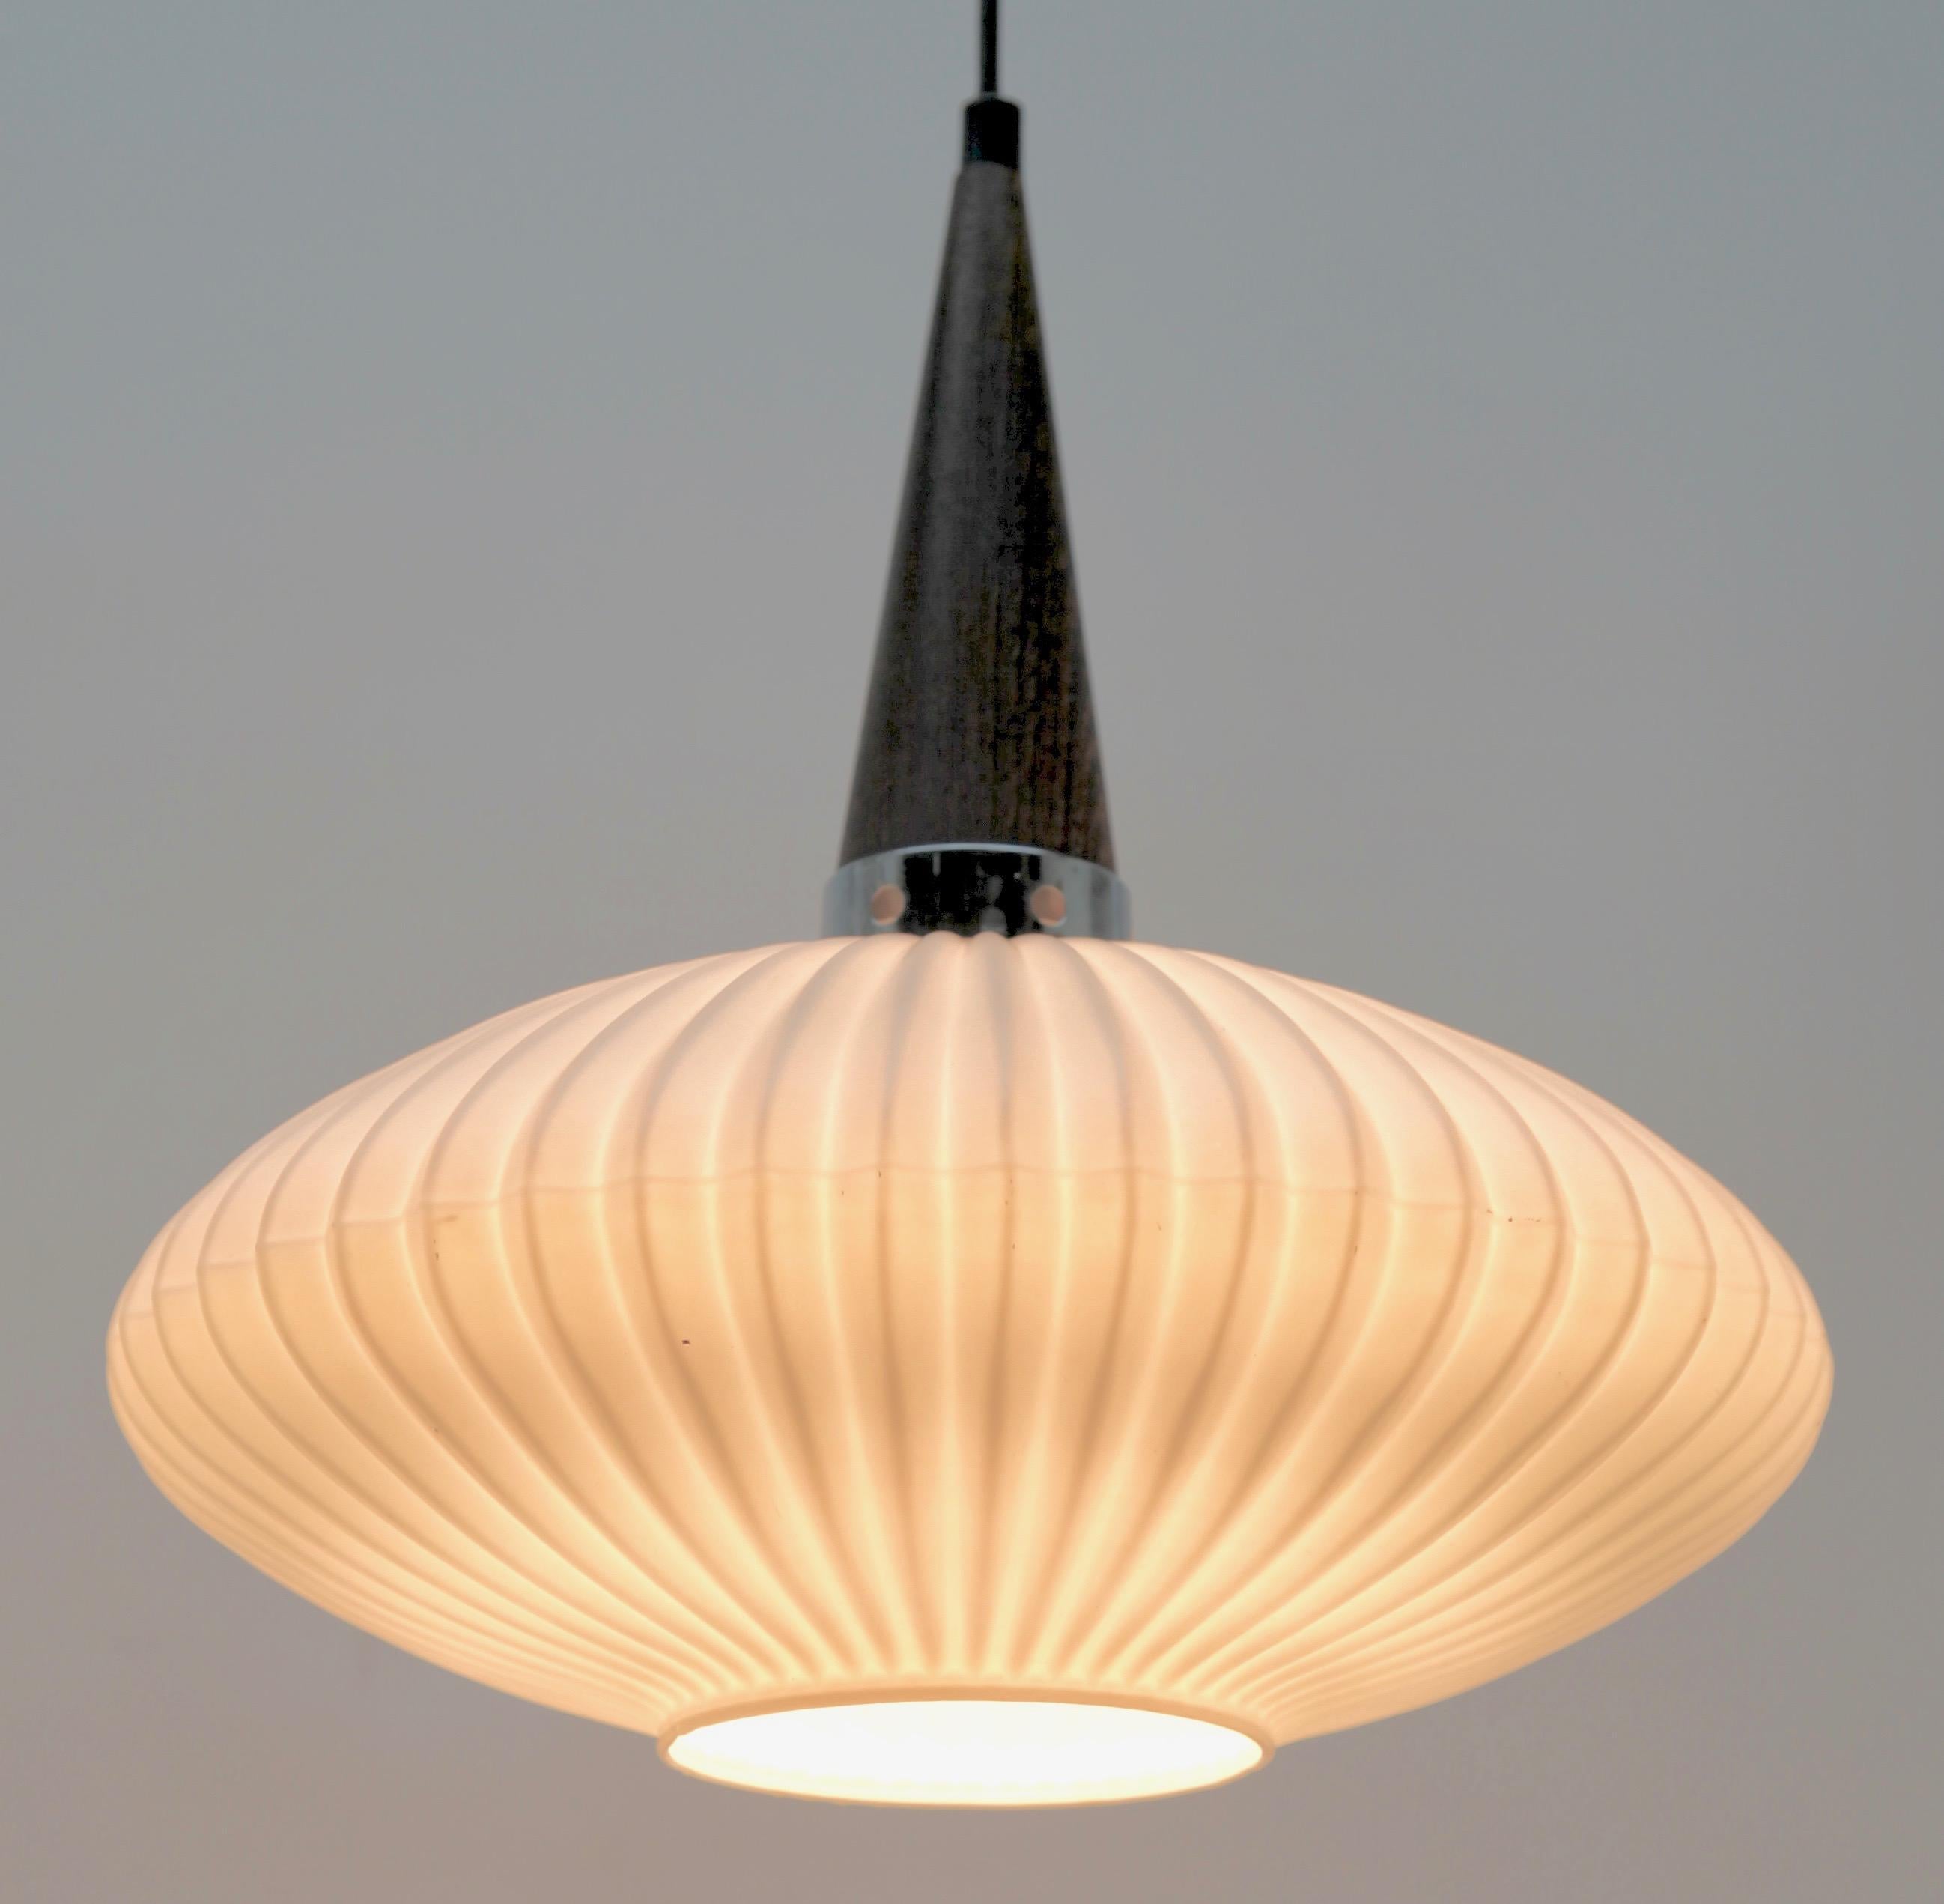 Mid-20th Century Midcentury Scandinavian Pendant Light, Wenge with Optical Opaline Shade